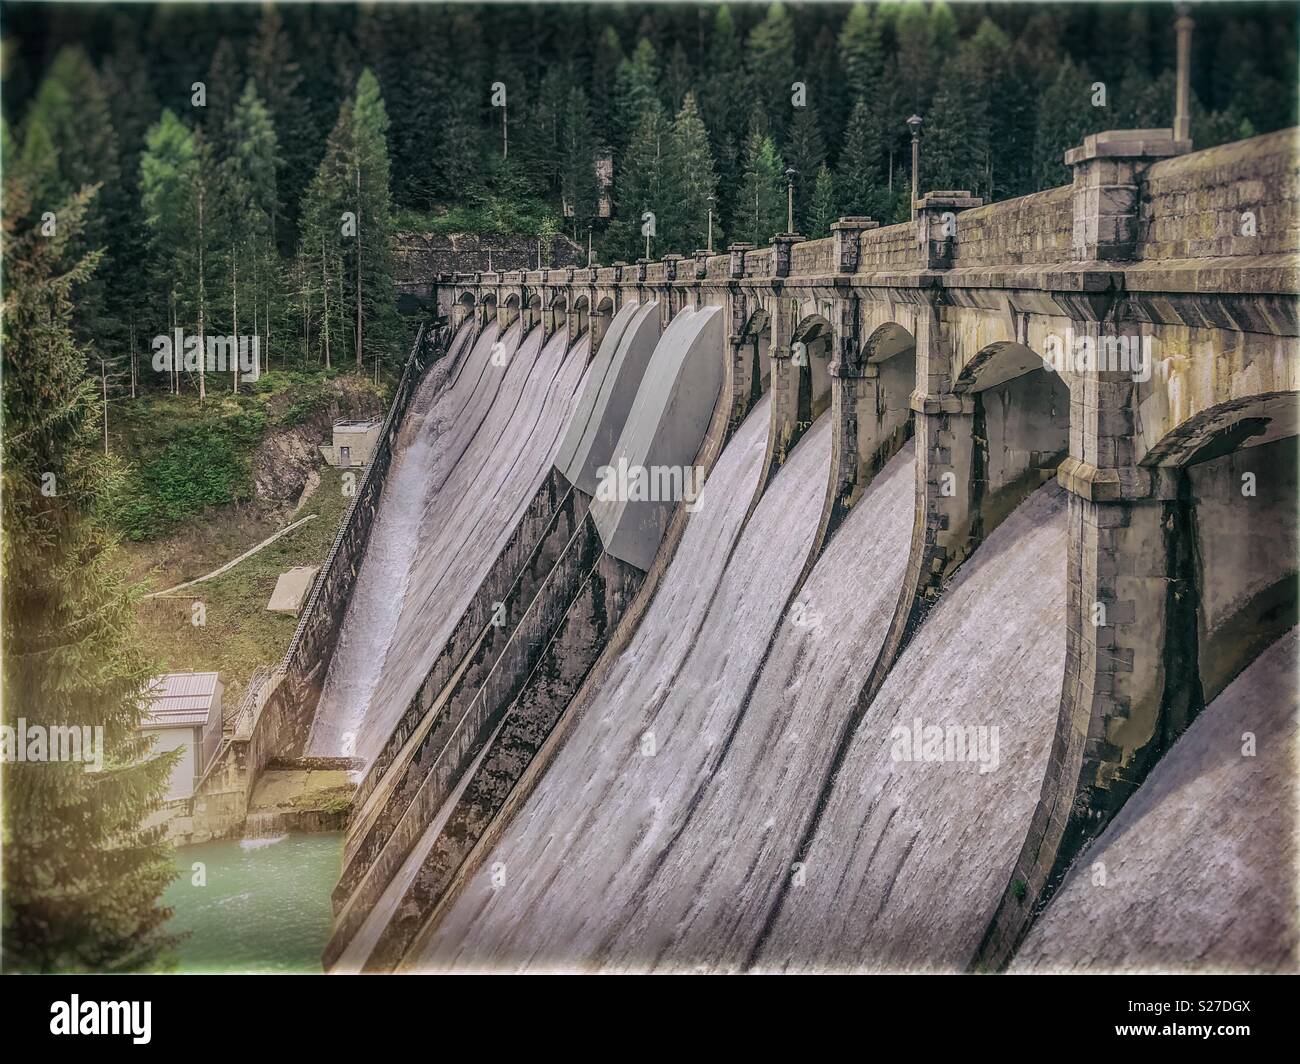 Water rushing through gates at a dam - Santa Caterina Lake, Auronzo di Cadore, Italy Stock Photo